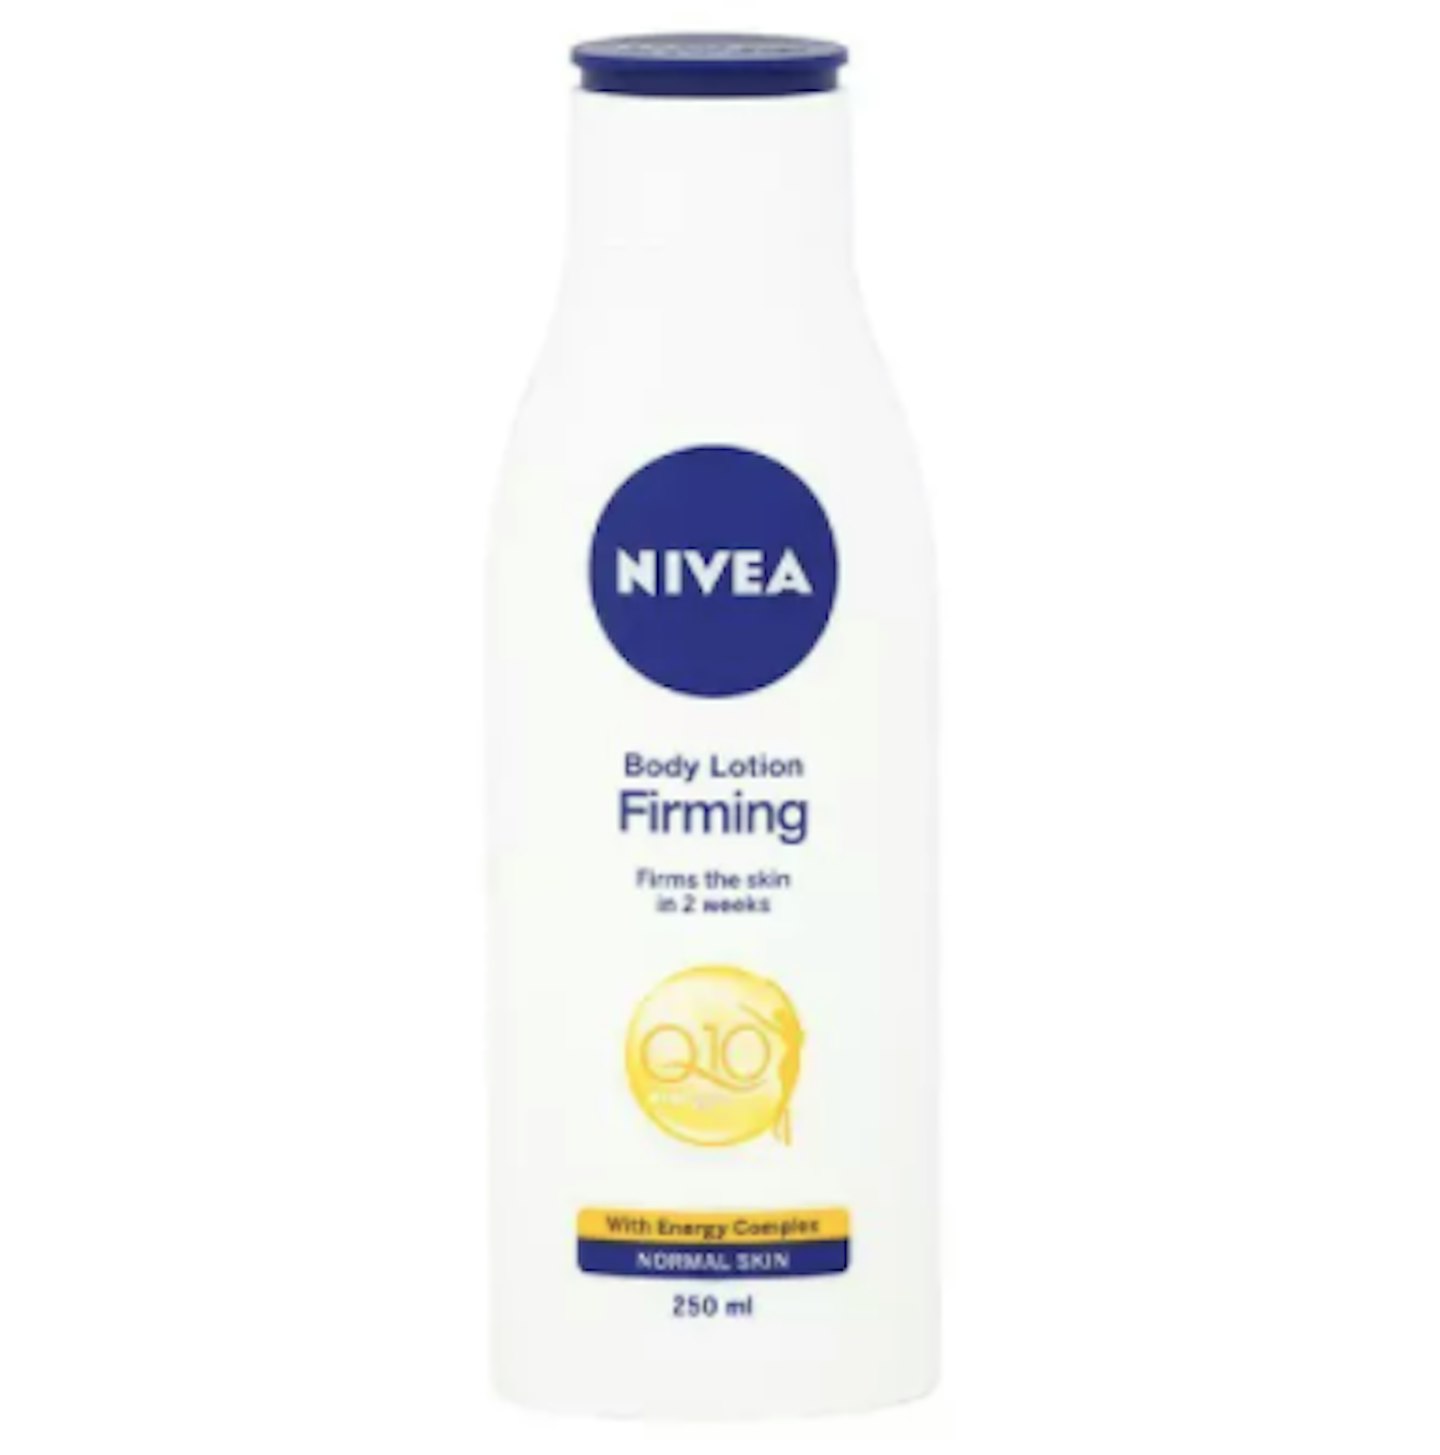 nivea-firming-body-lotion